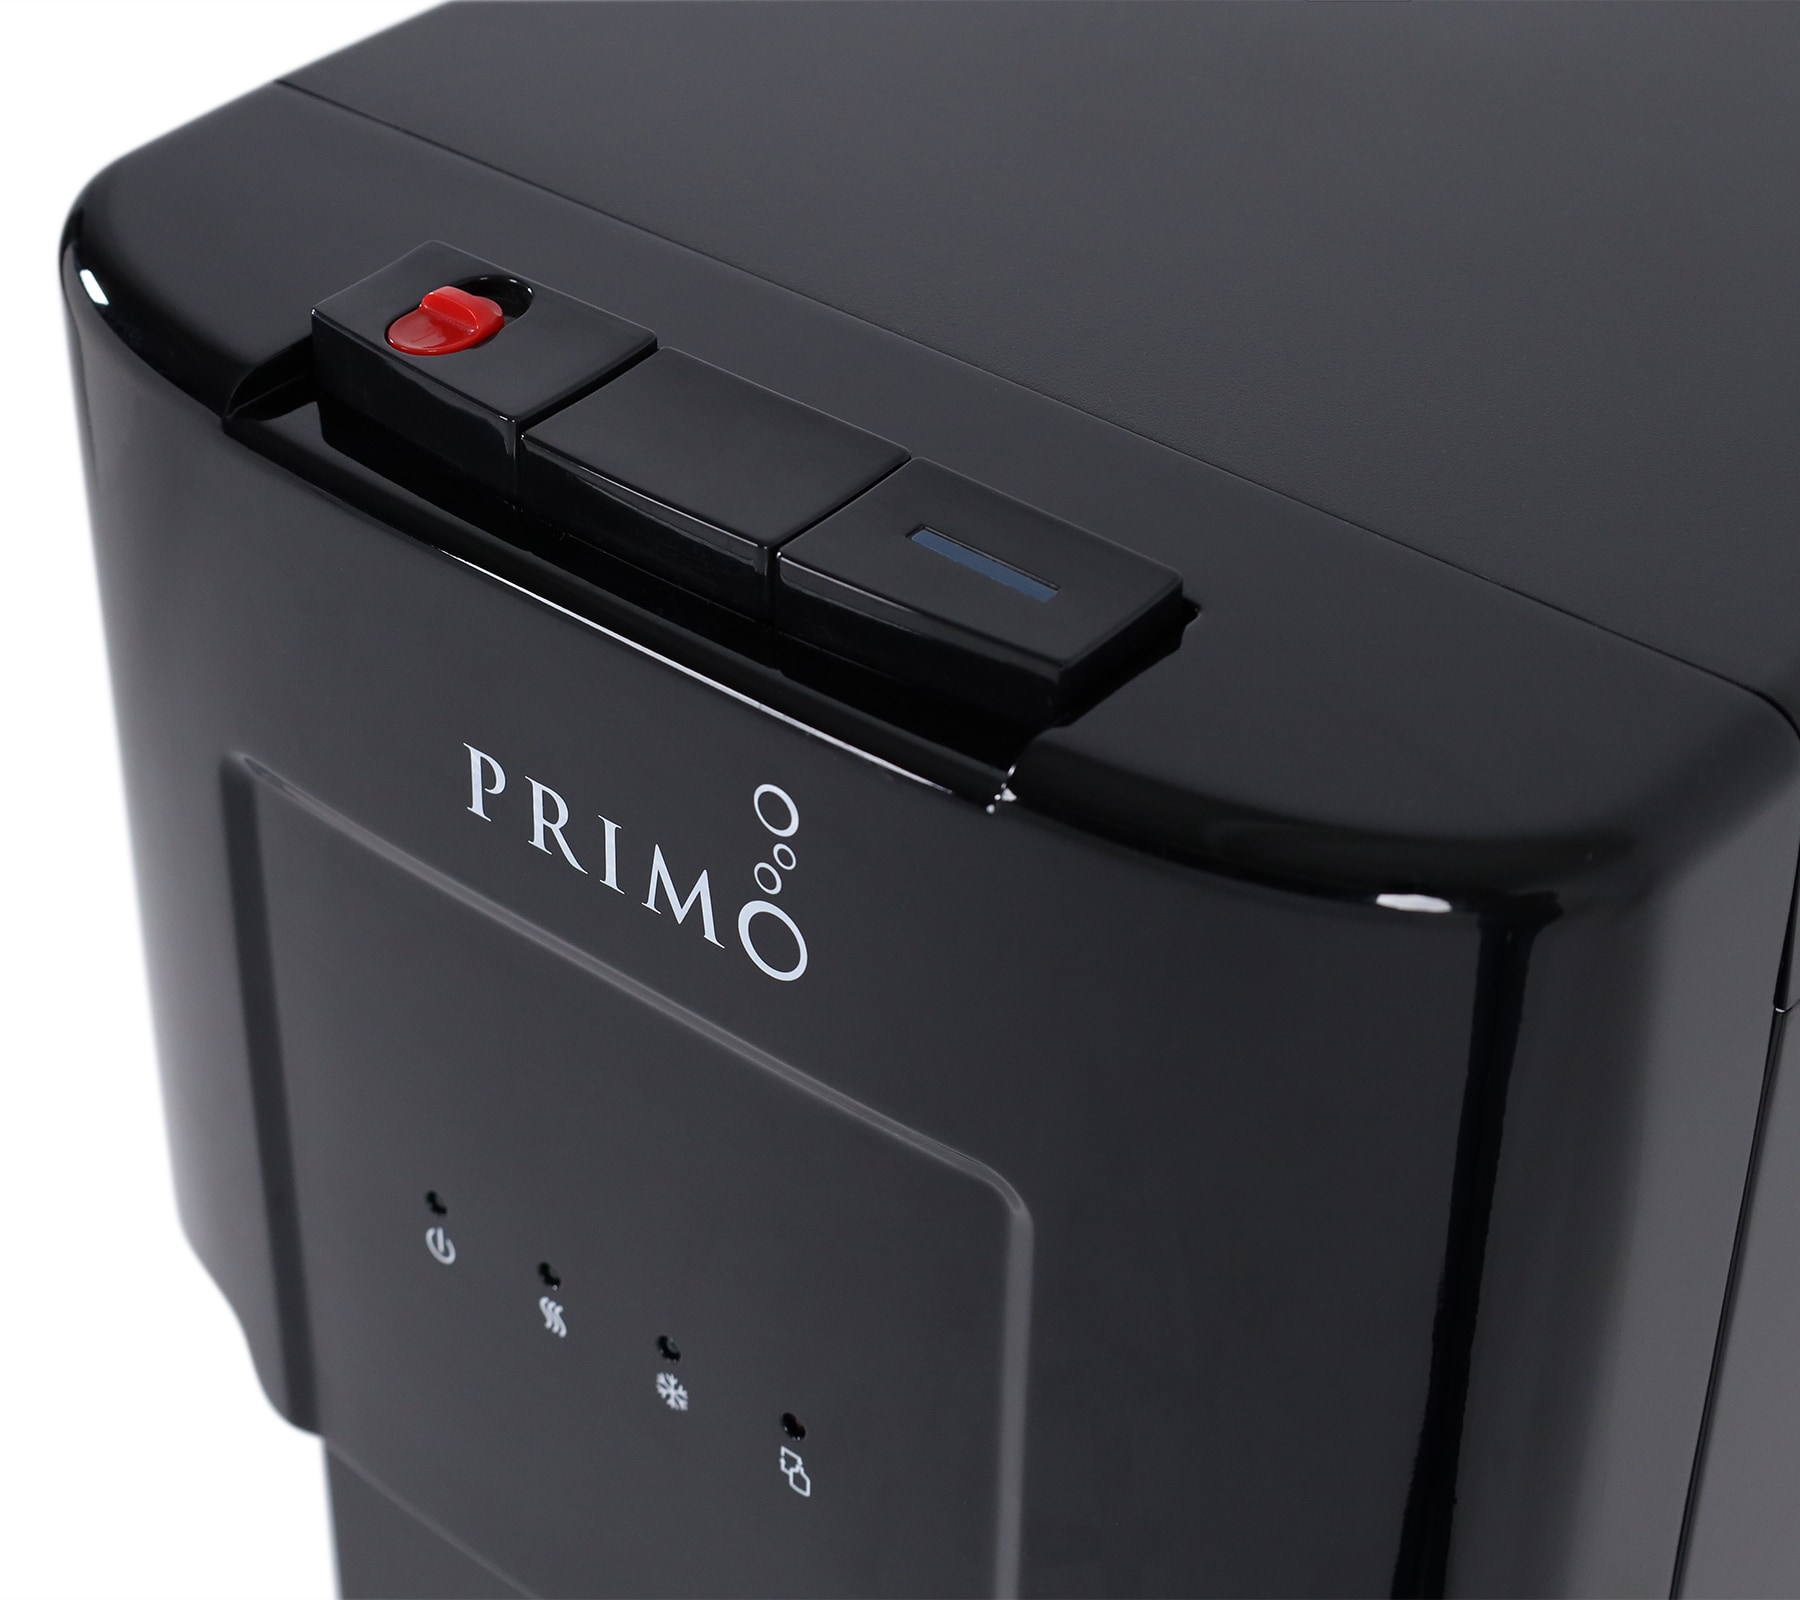 Primo water dispenser's controls